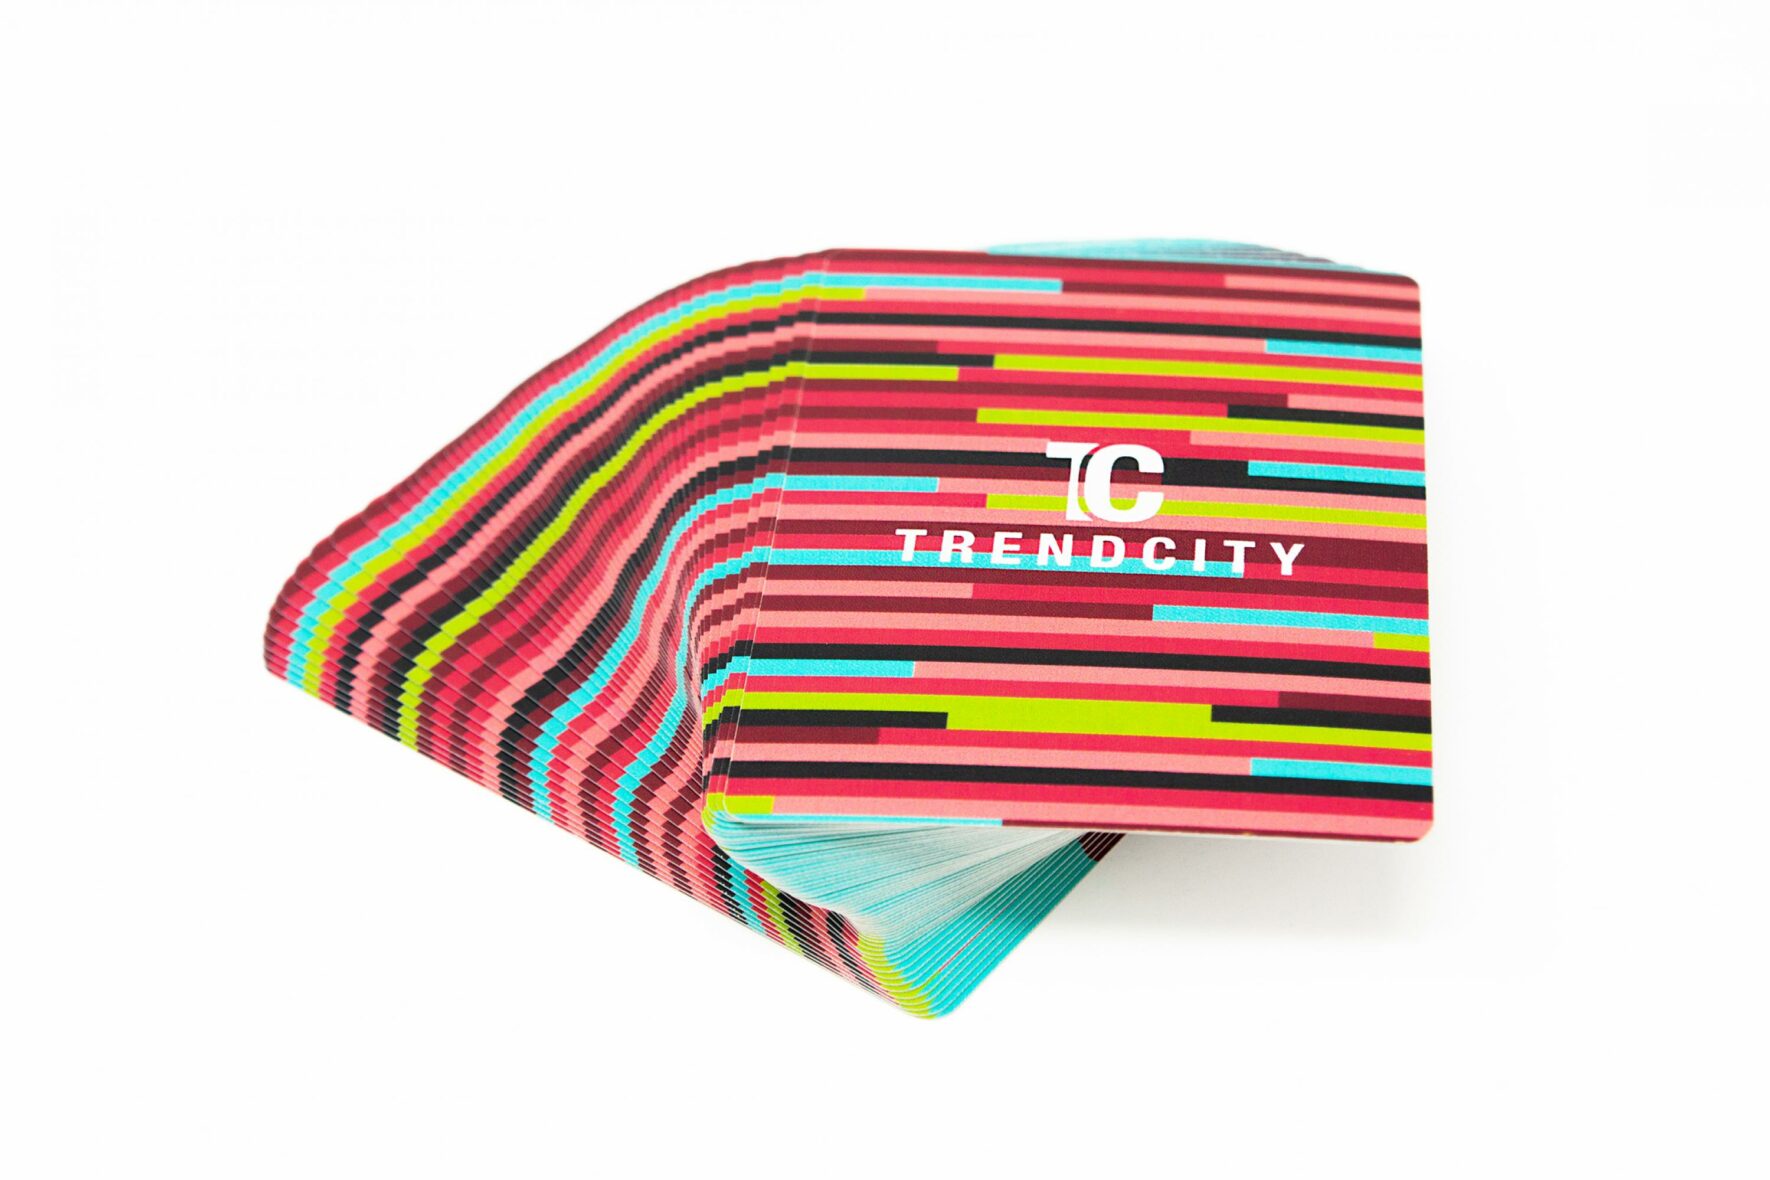 Pokerkarten-trendcity-formlos-corporate-design-print-5